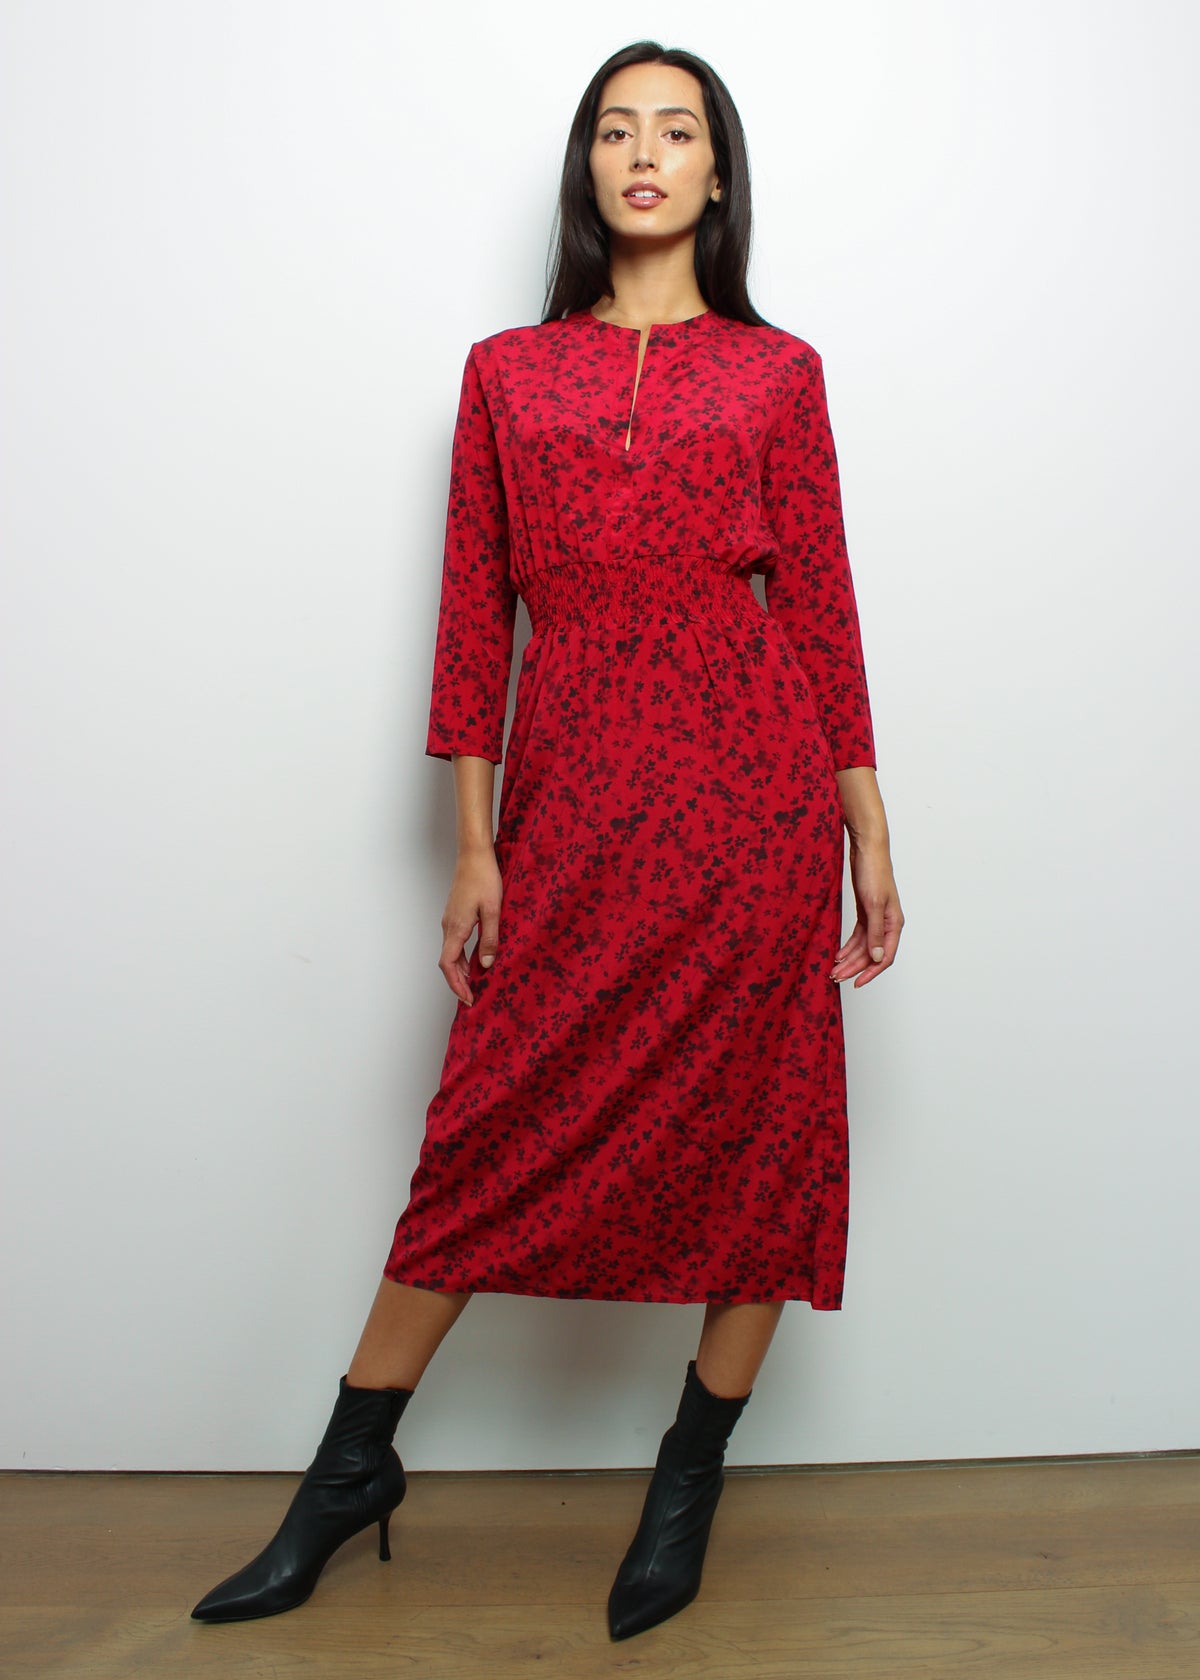 PPL Tiffany Dress in Flower Shadows 01 Russett Red